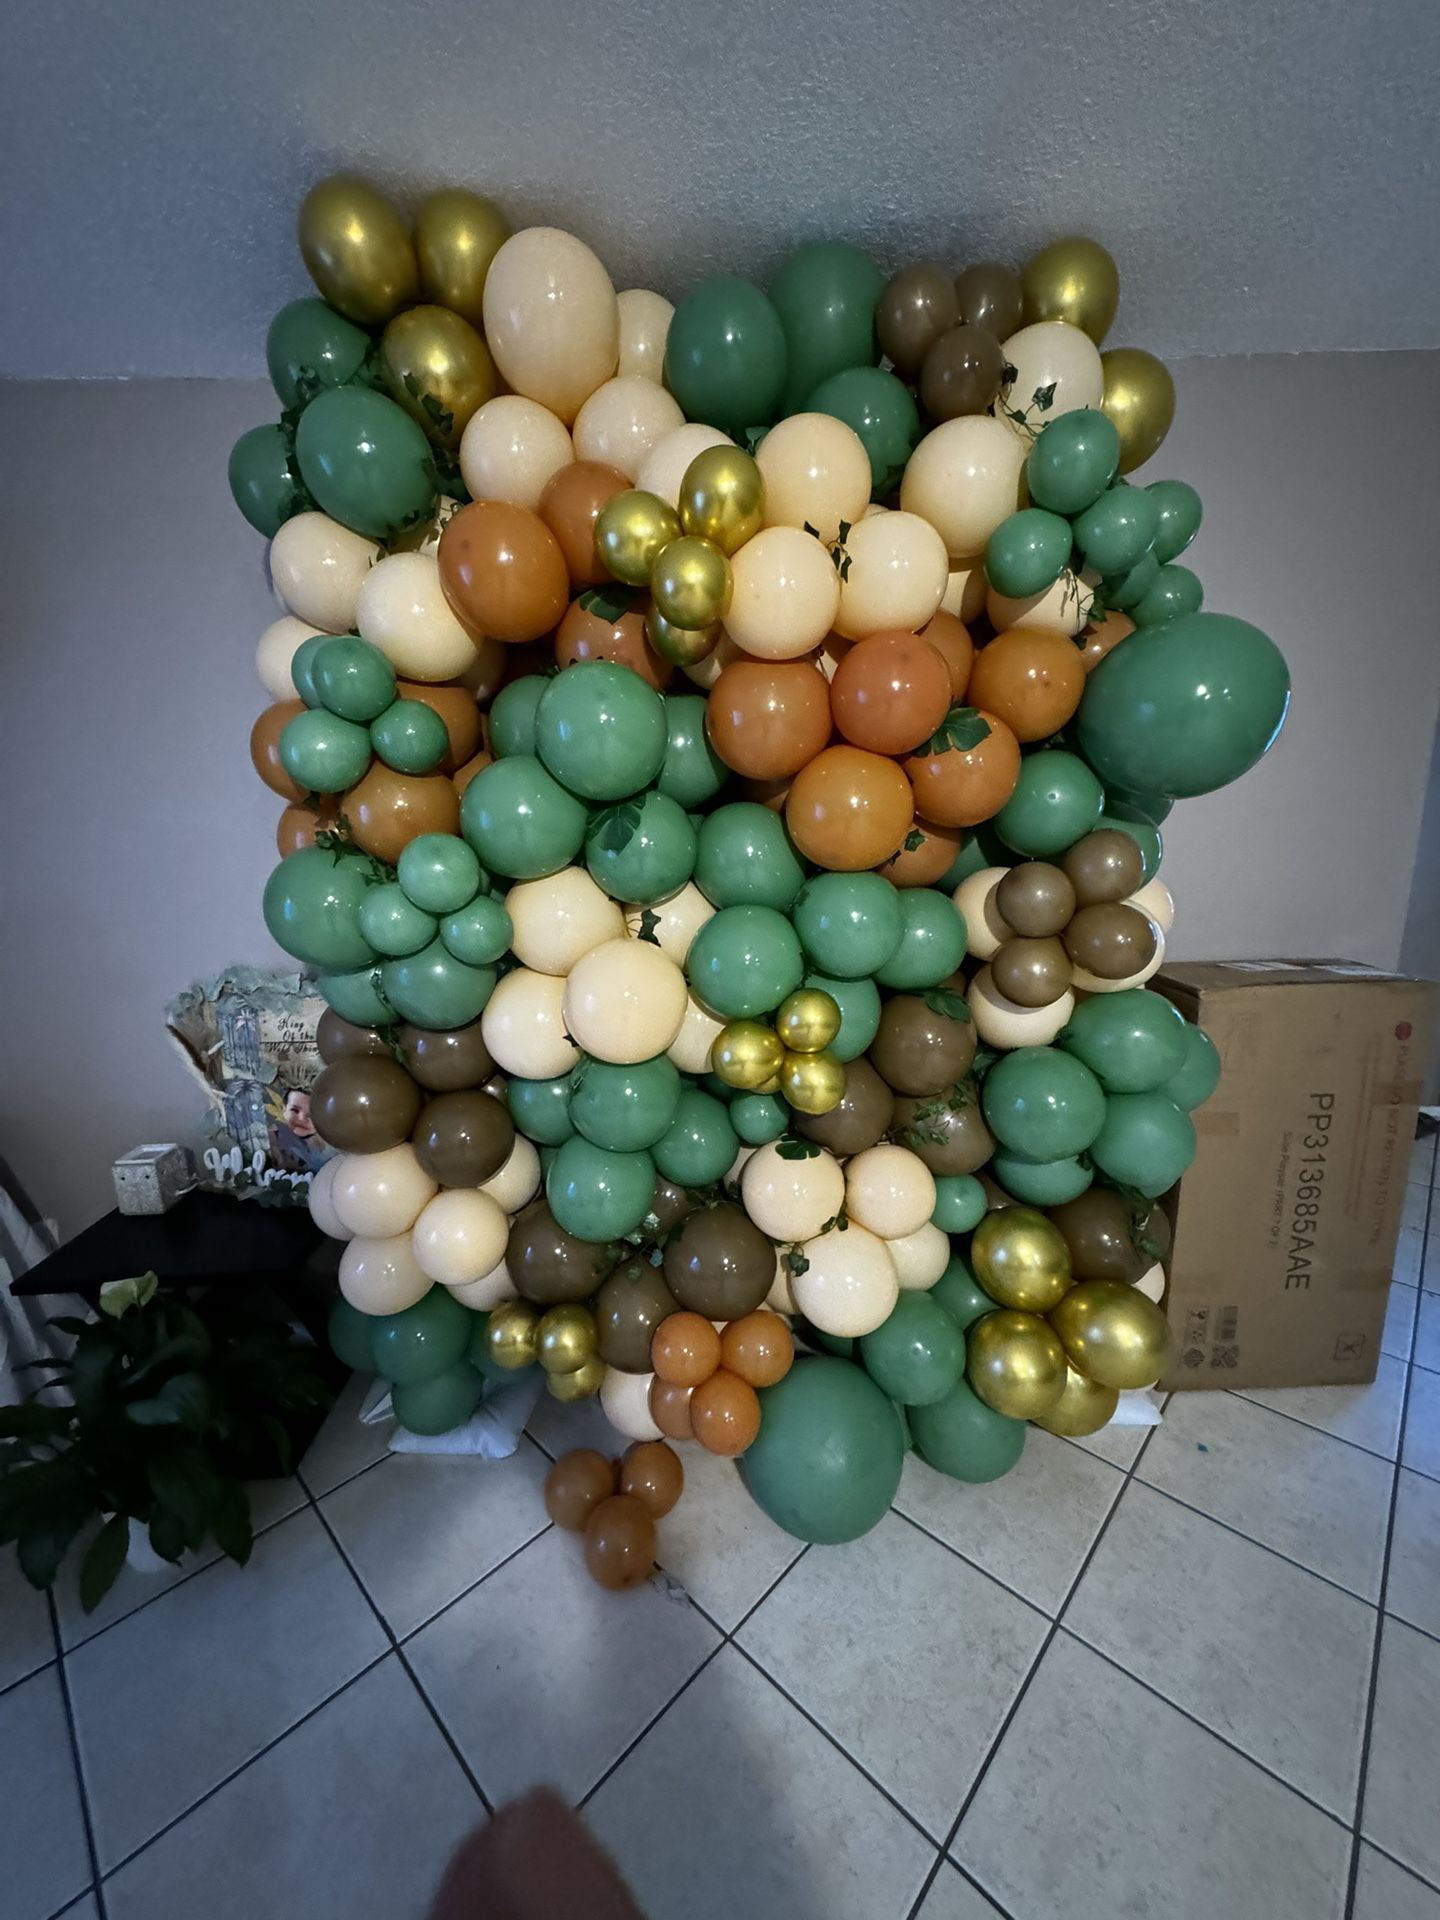 Balloon Arrangement For Birthday Party